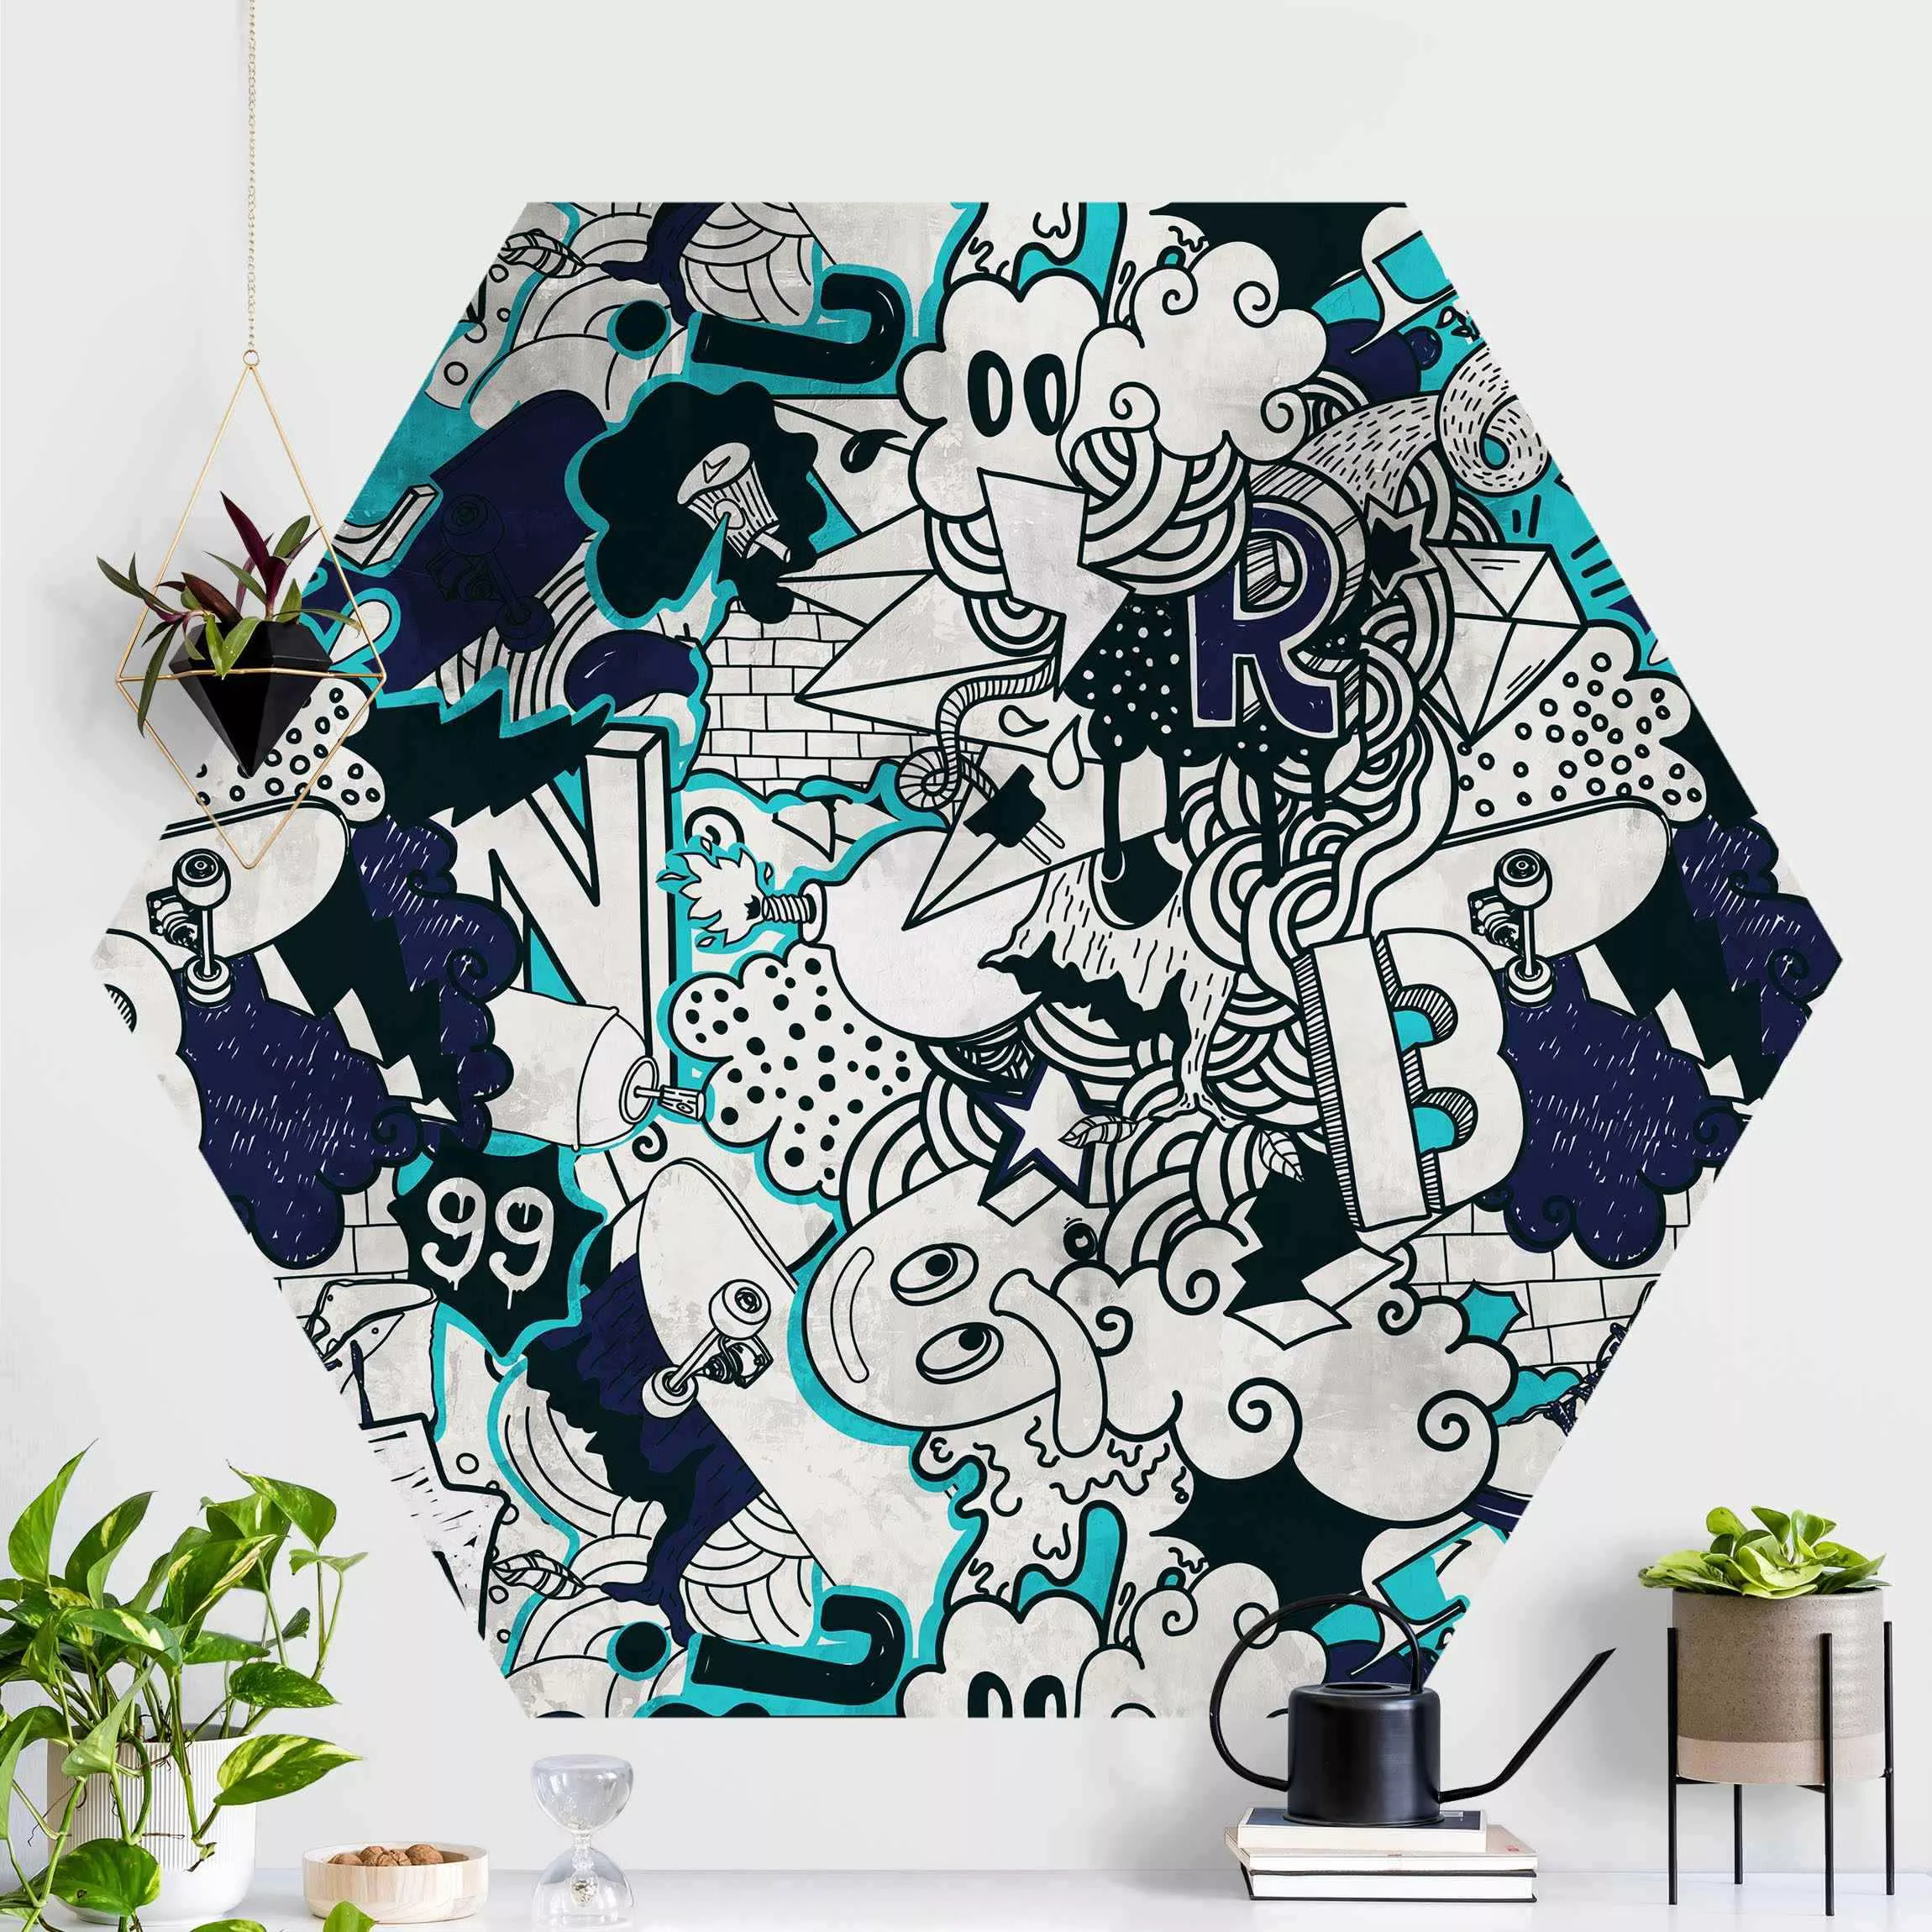 Hexagon Mustertapete selbstklebend Graffiti Art Skater Doodle günstig online kaufen